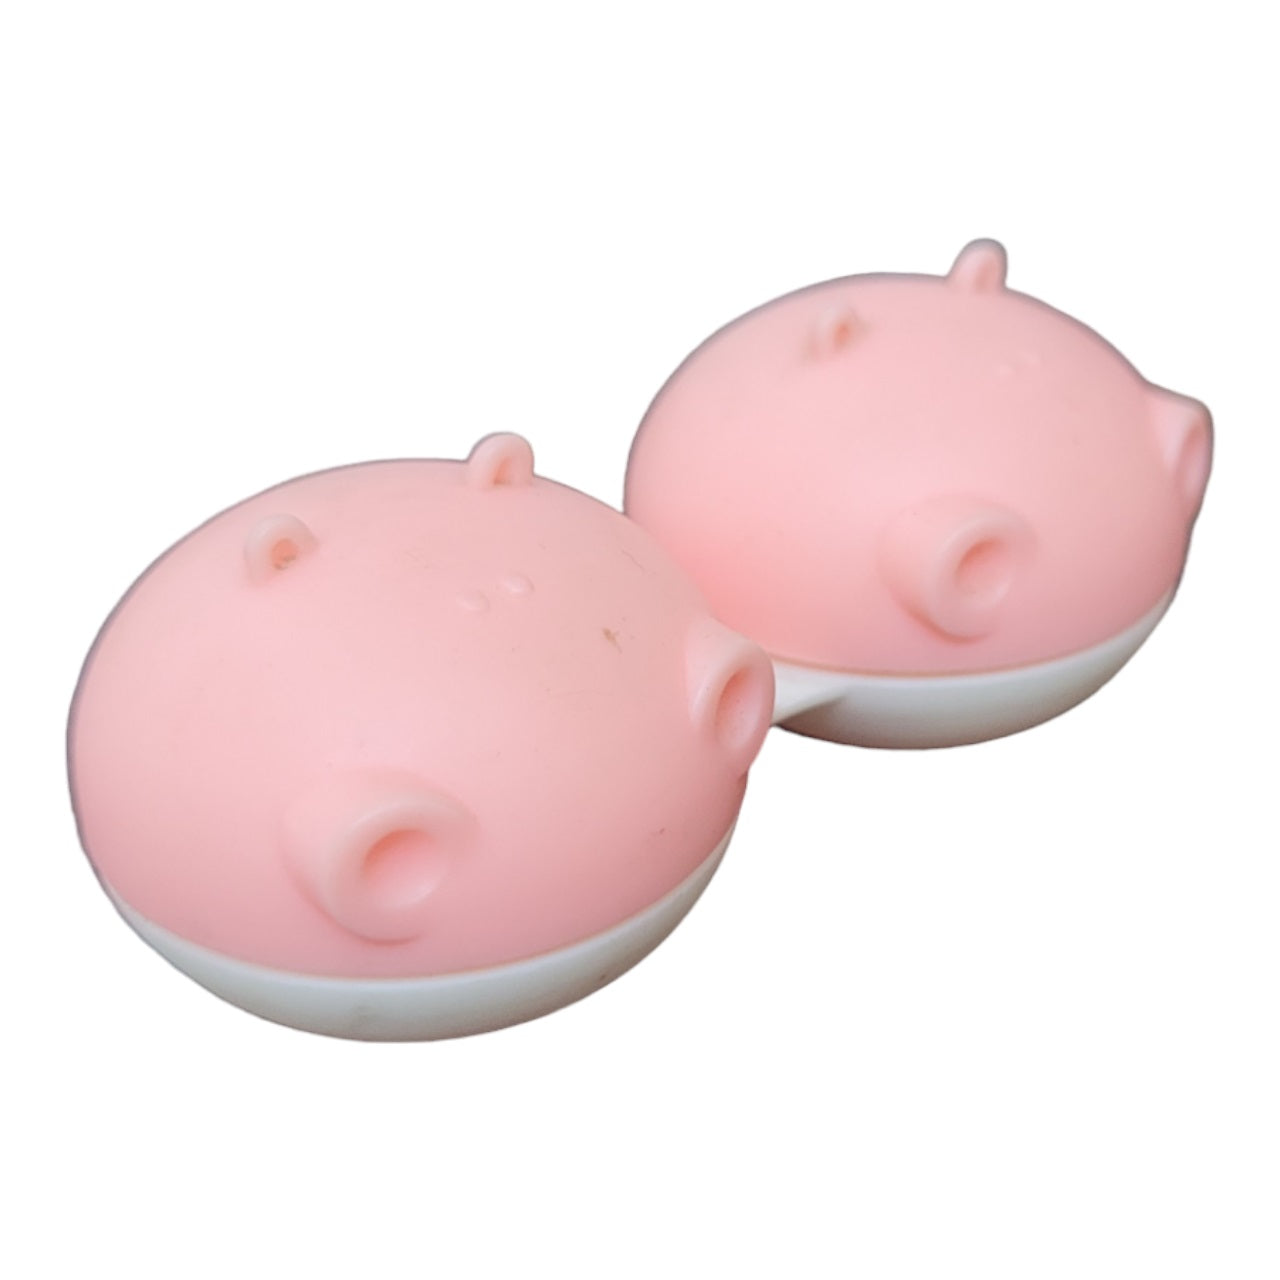 Hippo Contact Lens Case | Fancy Contact Lenses Case Pink Color by Affaires Qcase-0048